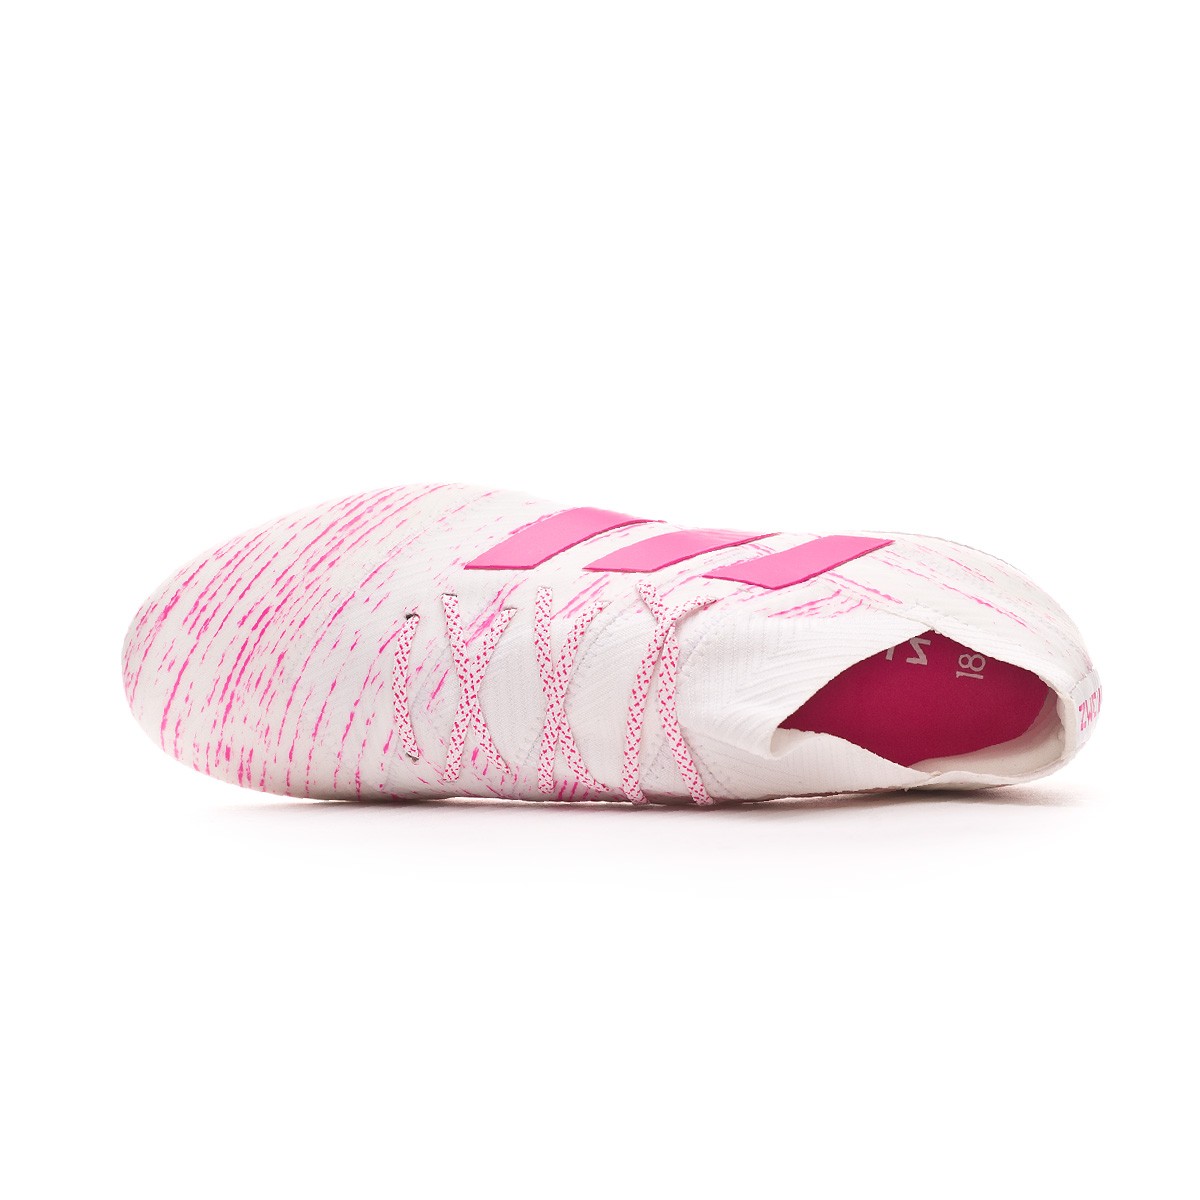 adidas nemeziz 18.3 white and pink